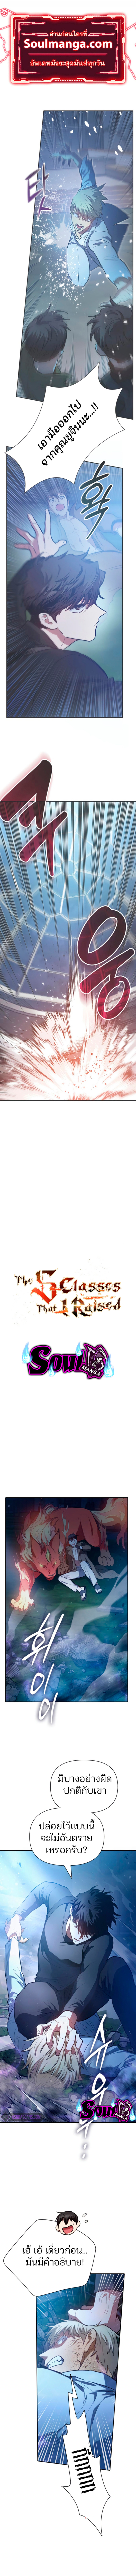 The S Classes That I Raised 76 01